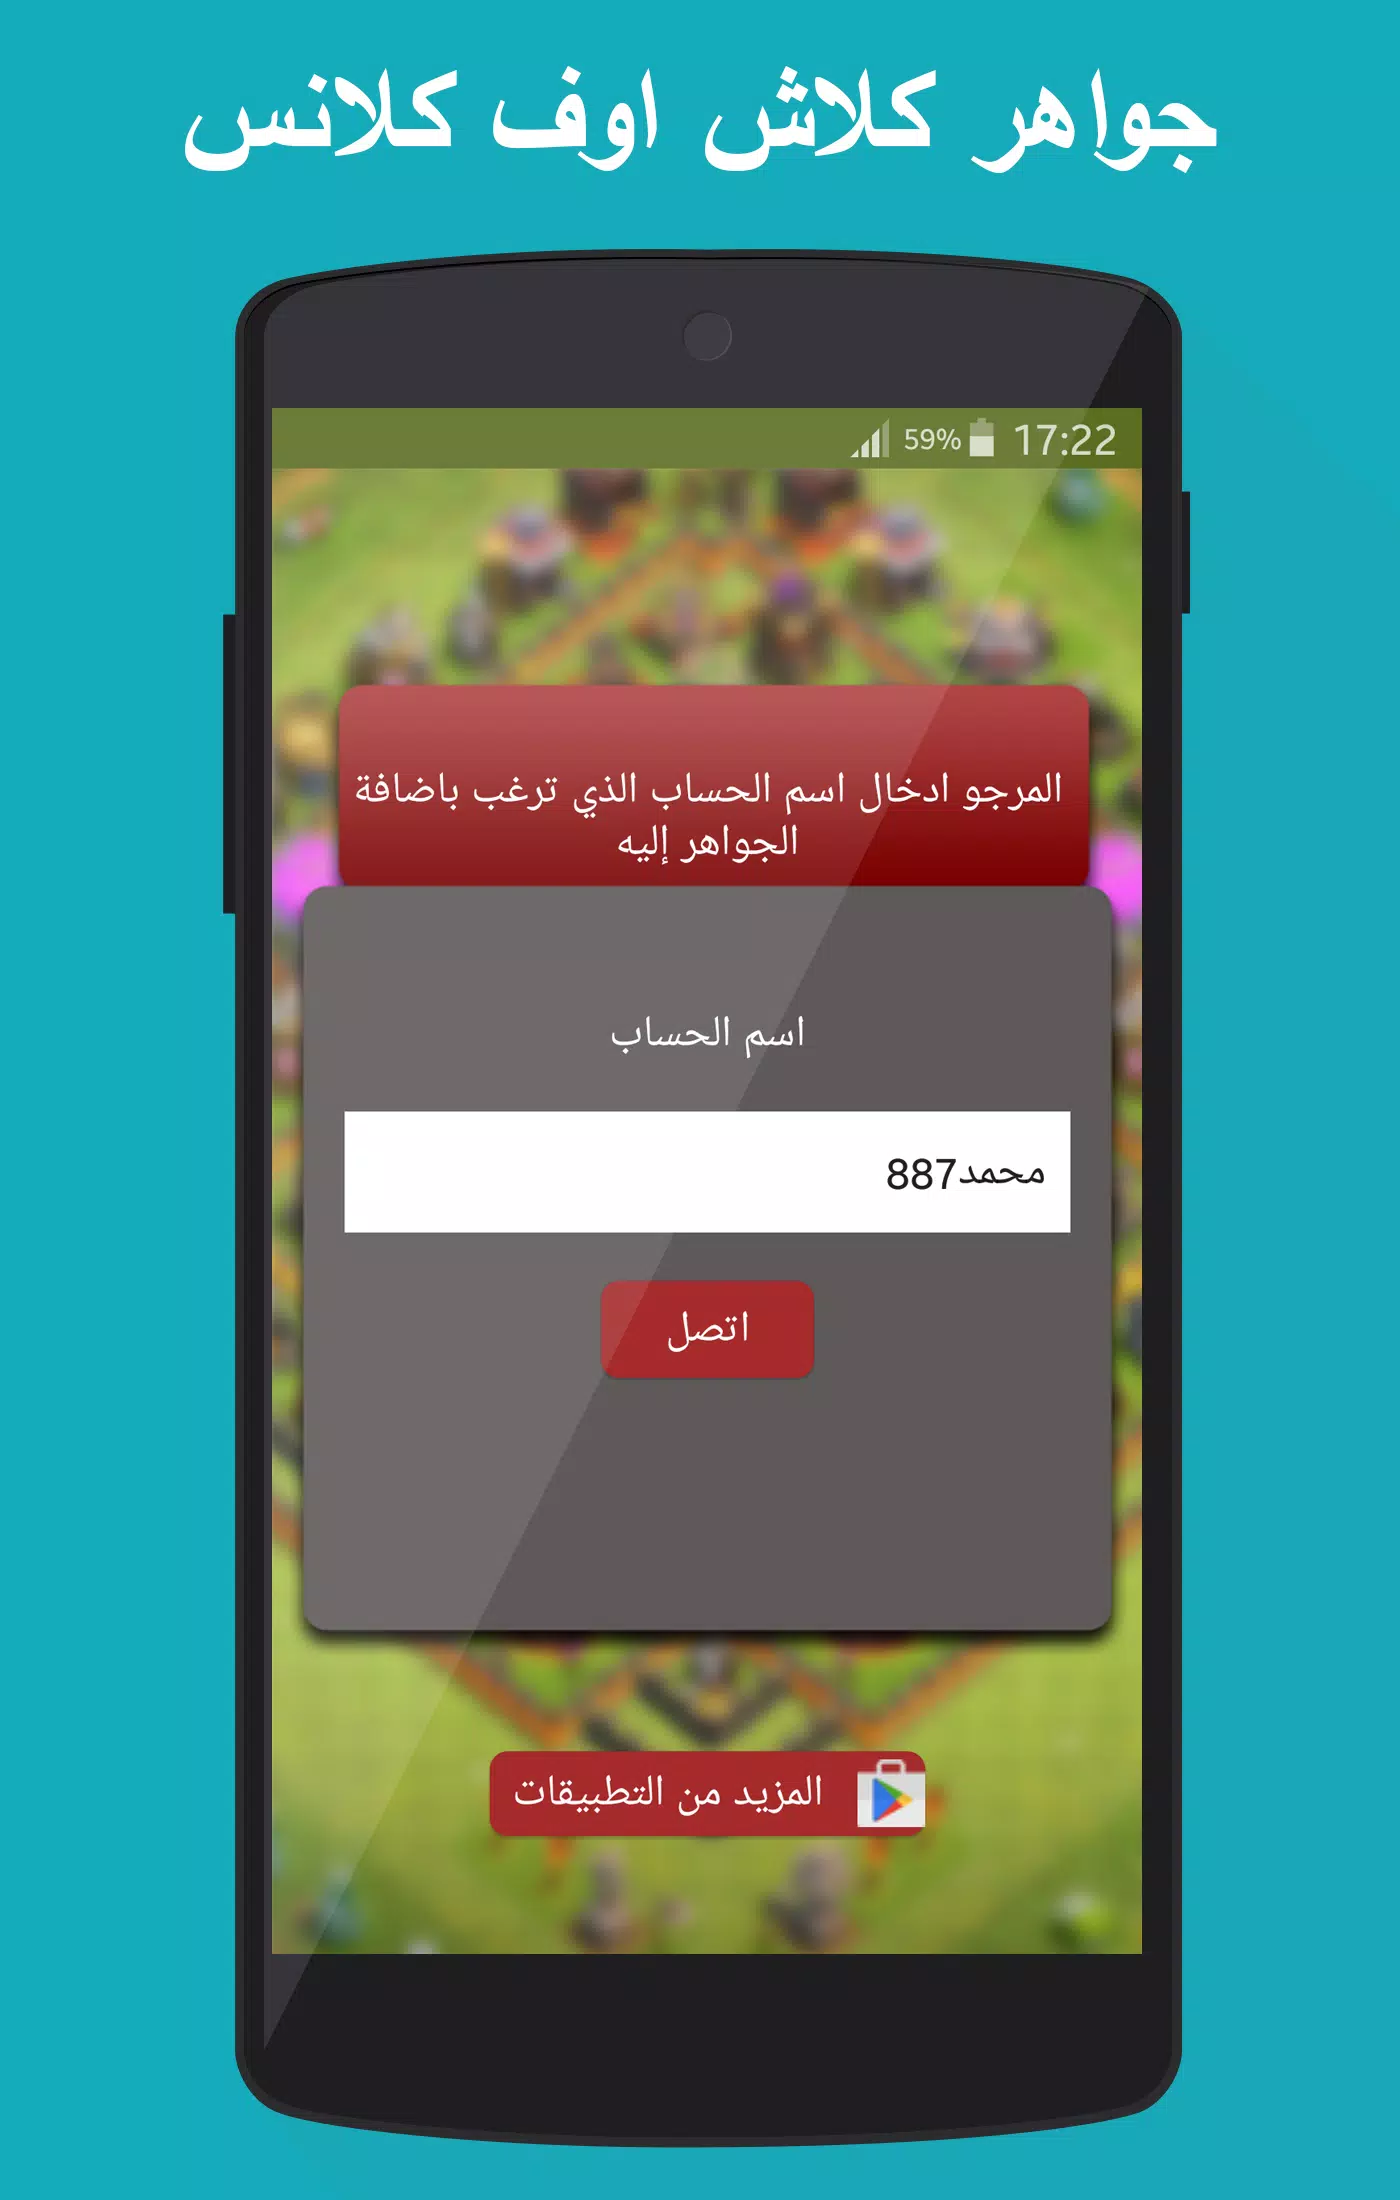 جواهر كلاش اوف كلانس prank APK for Android Download